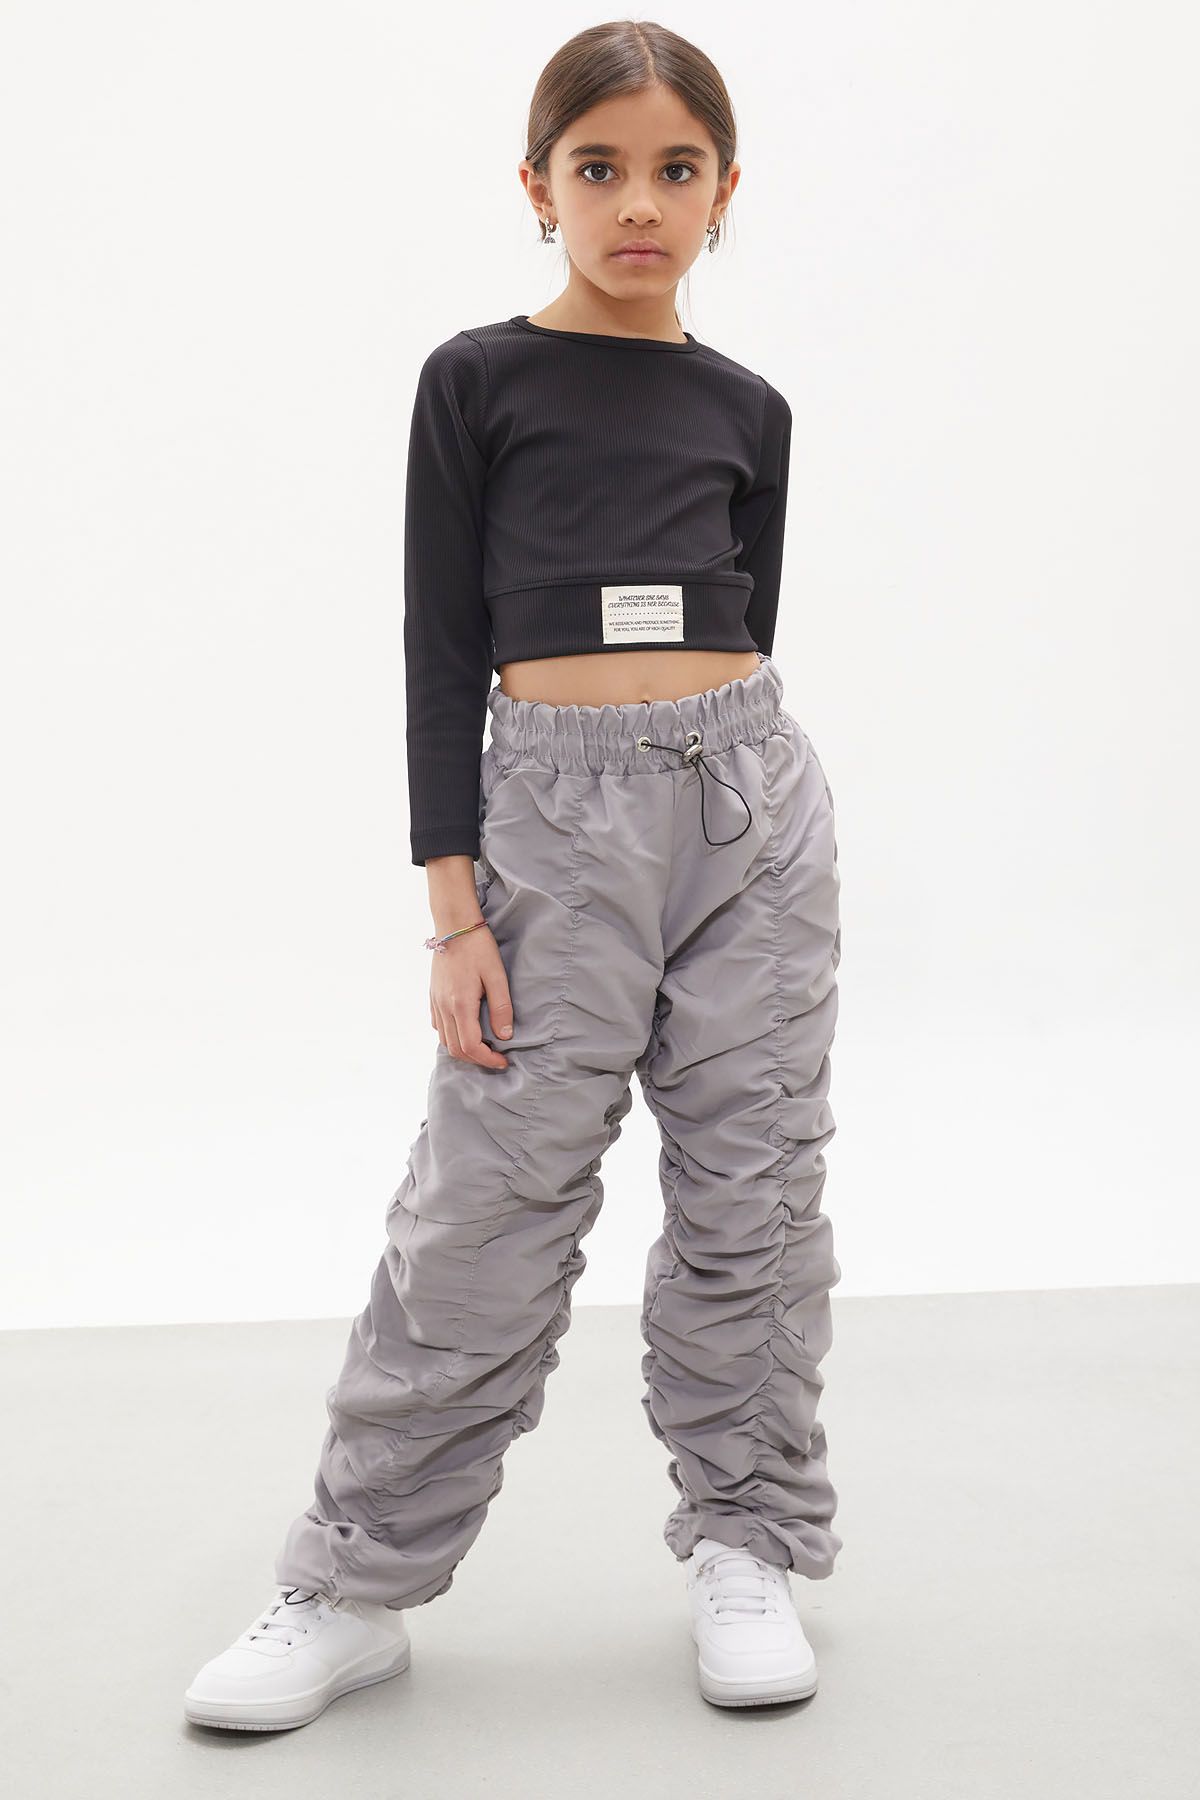 Cansın Mini Gri Şerit Dikişli Kız Paraşüt Pantolon 18003